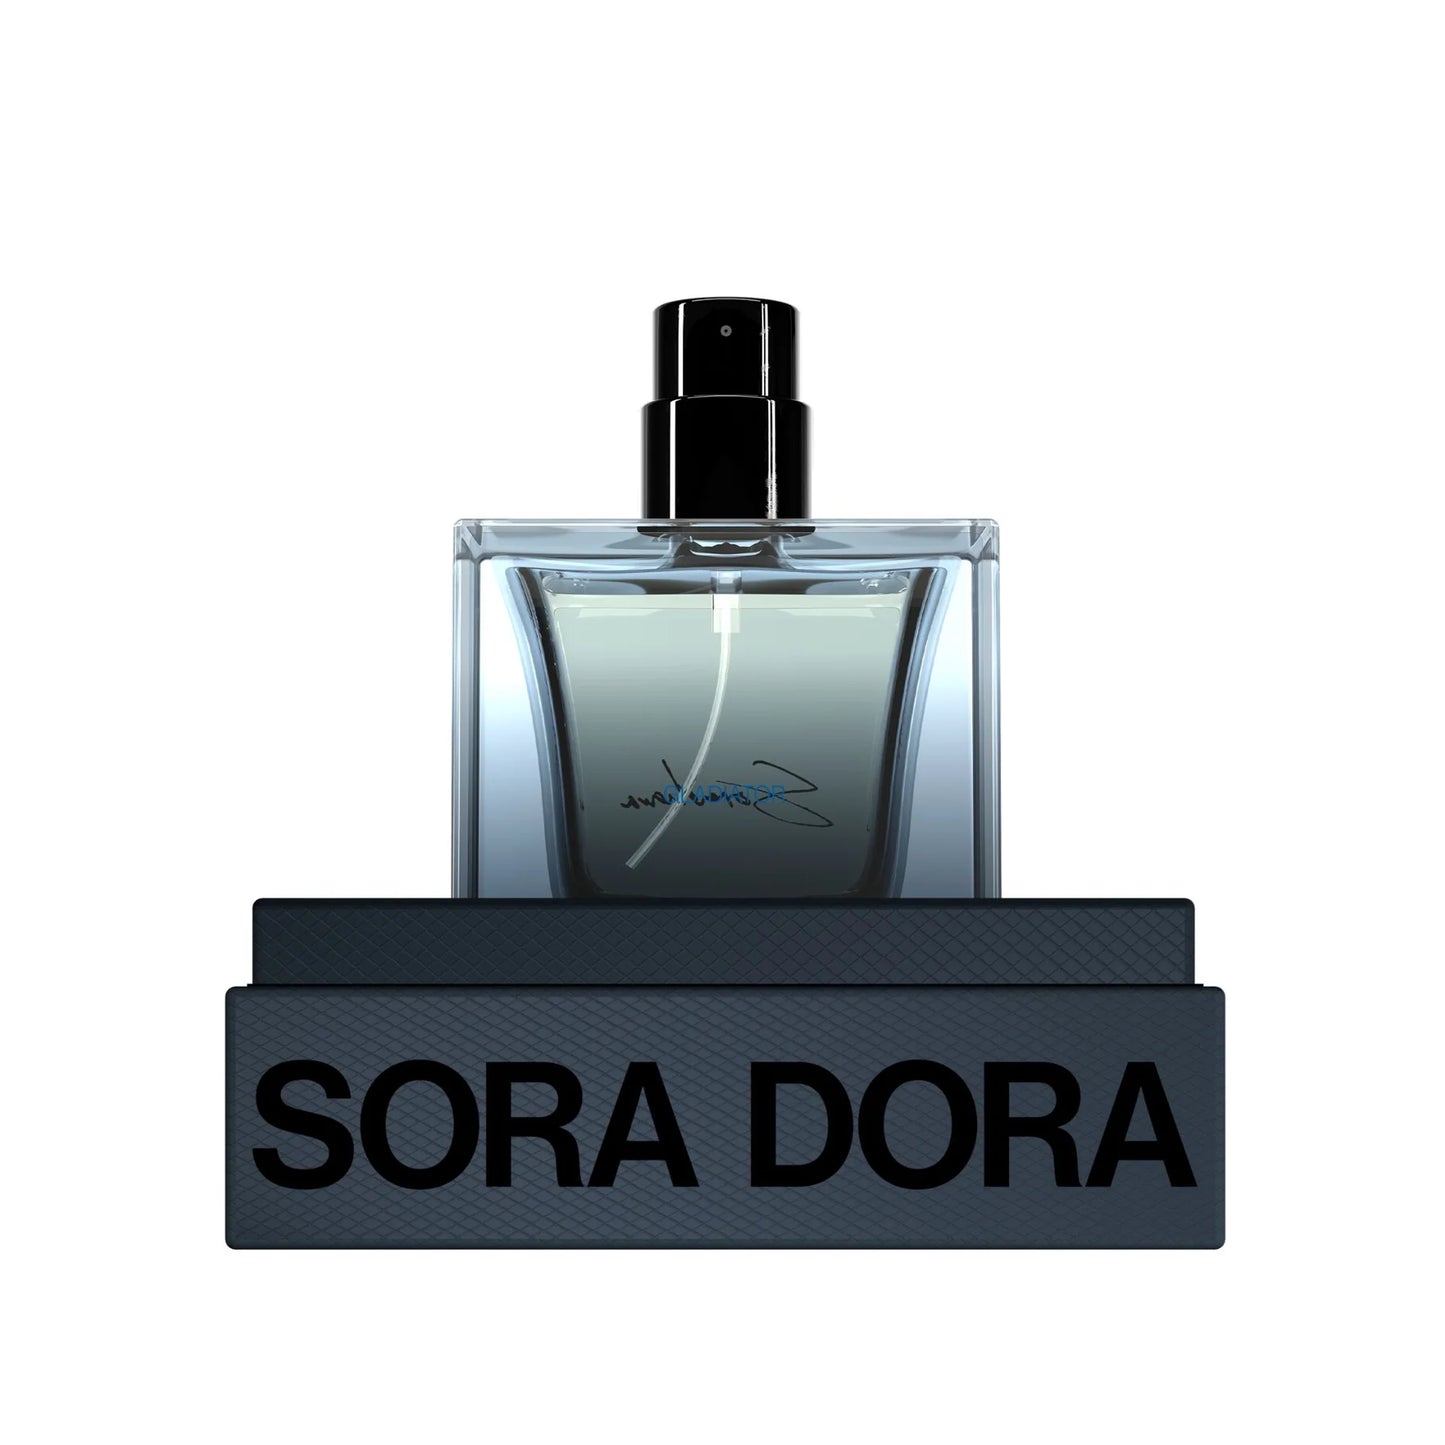 Gladiator Sora Dora Extrait De Parfum 50ml